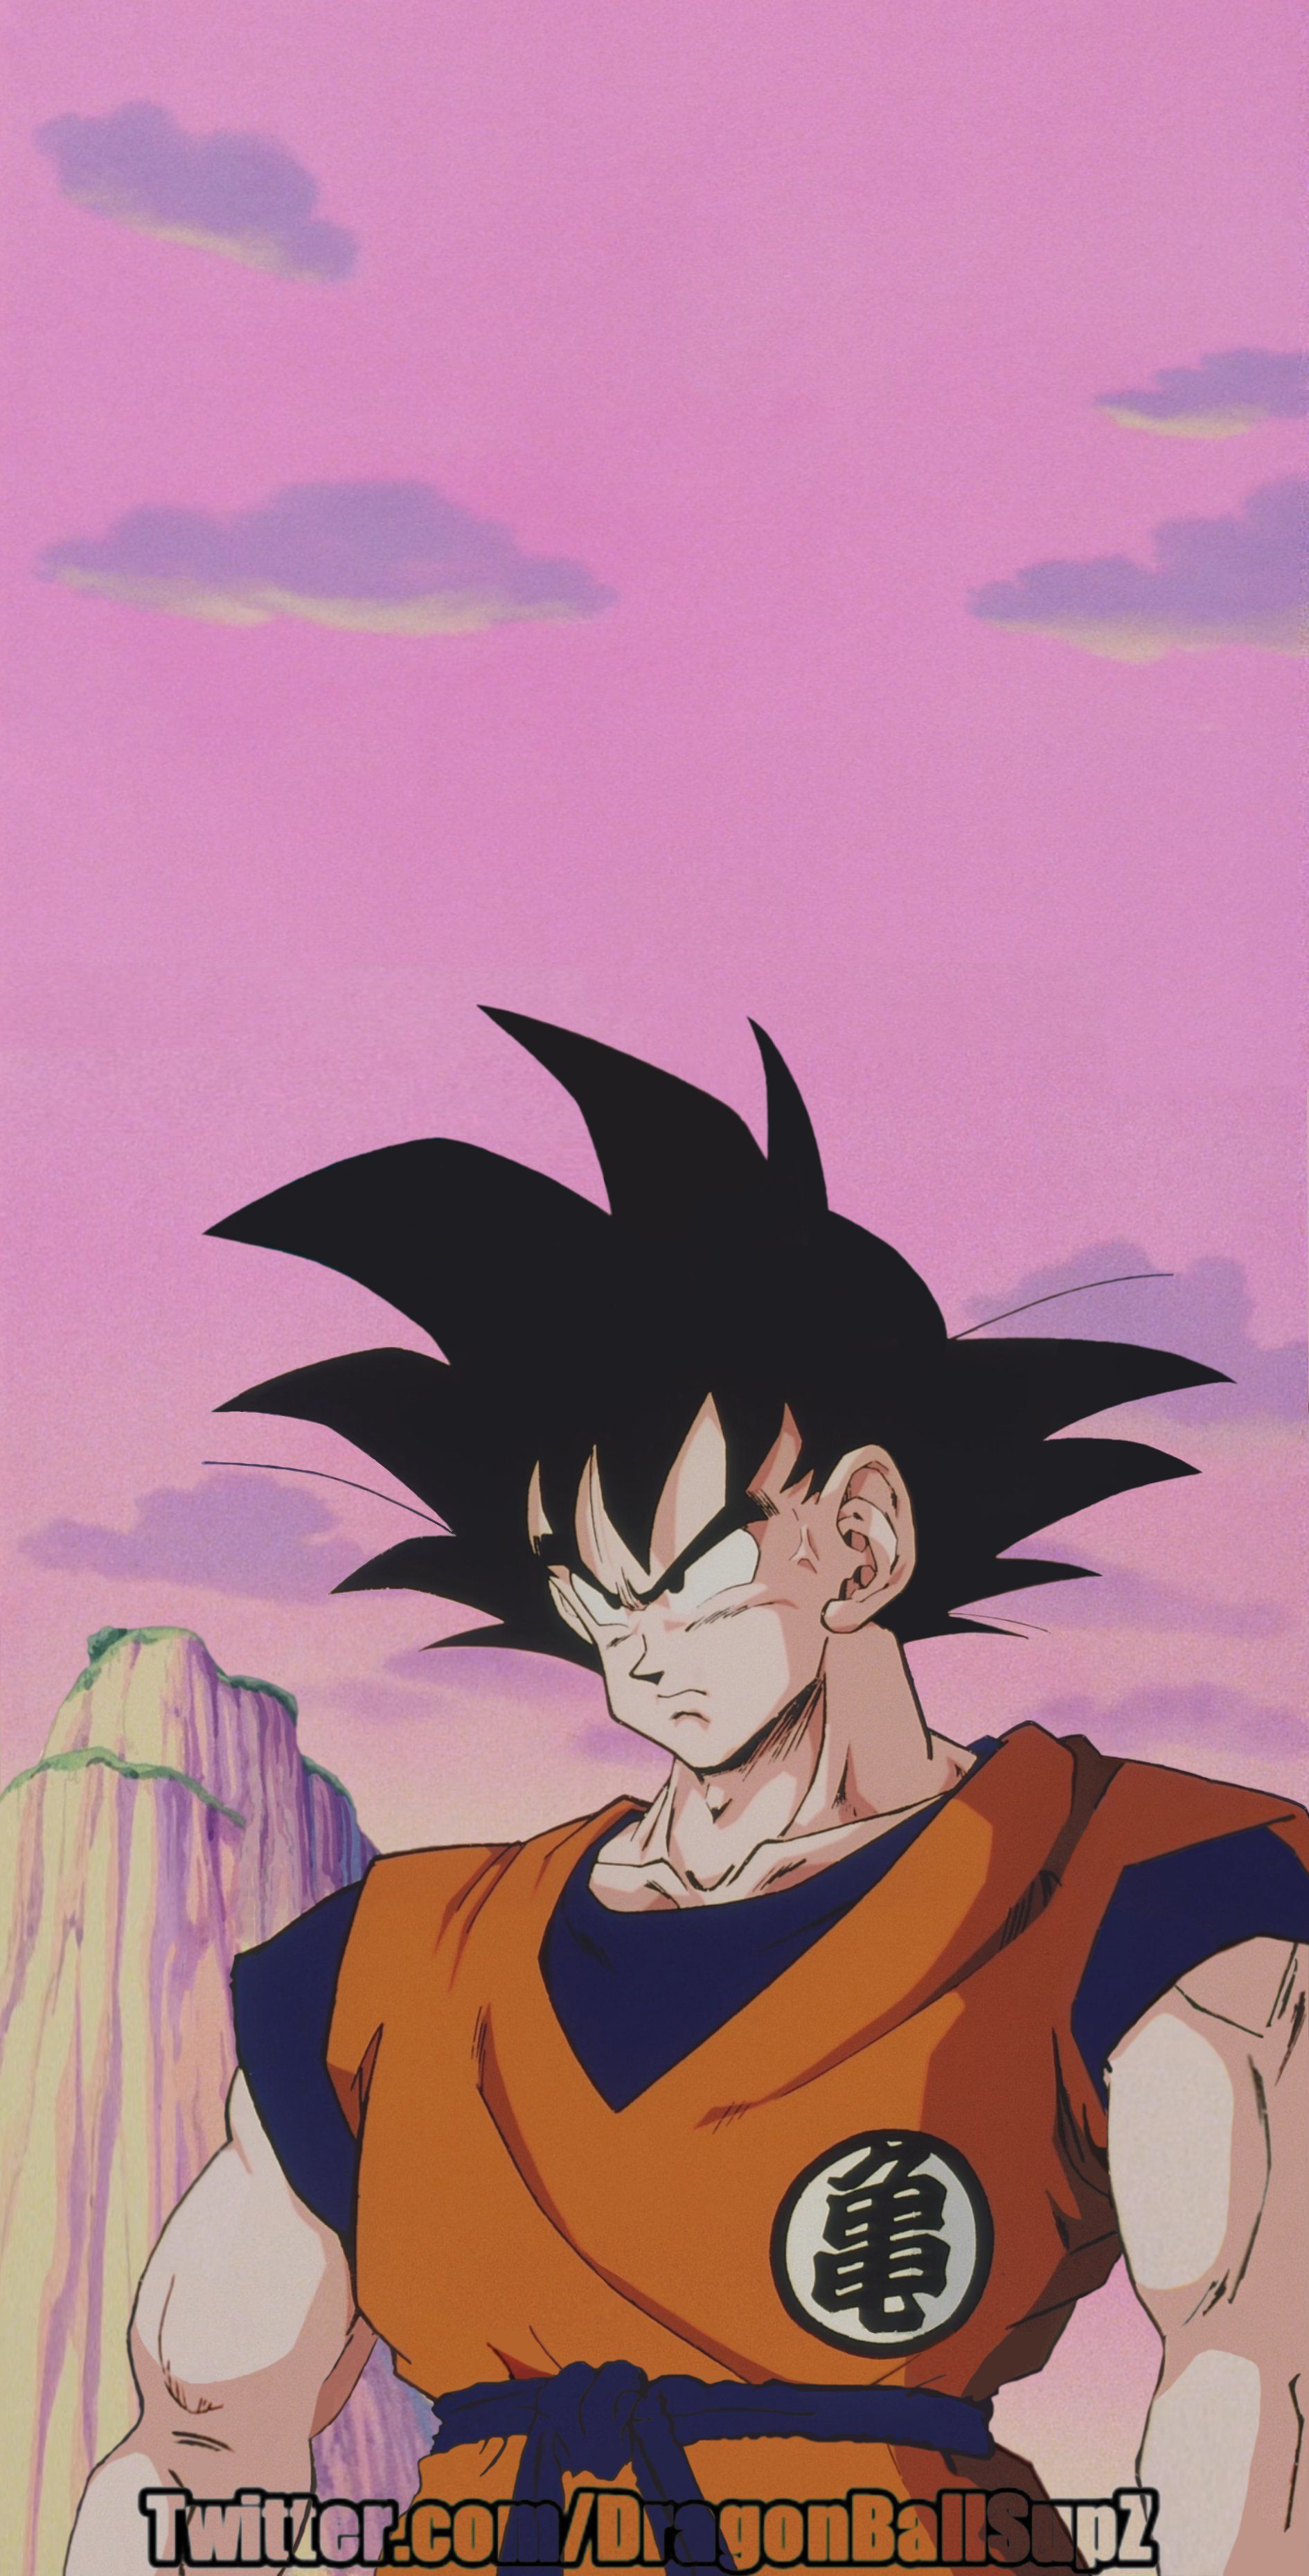 Aesthetic goku wallpaper phone backgrounds for your phone! - Goku, Dragon Ball